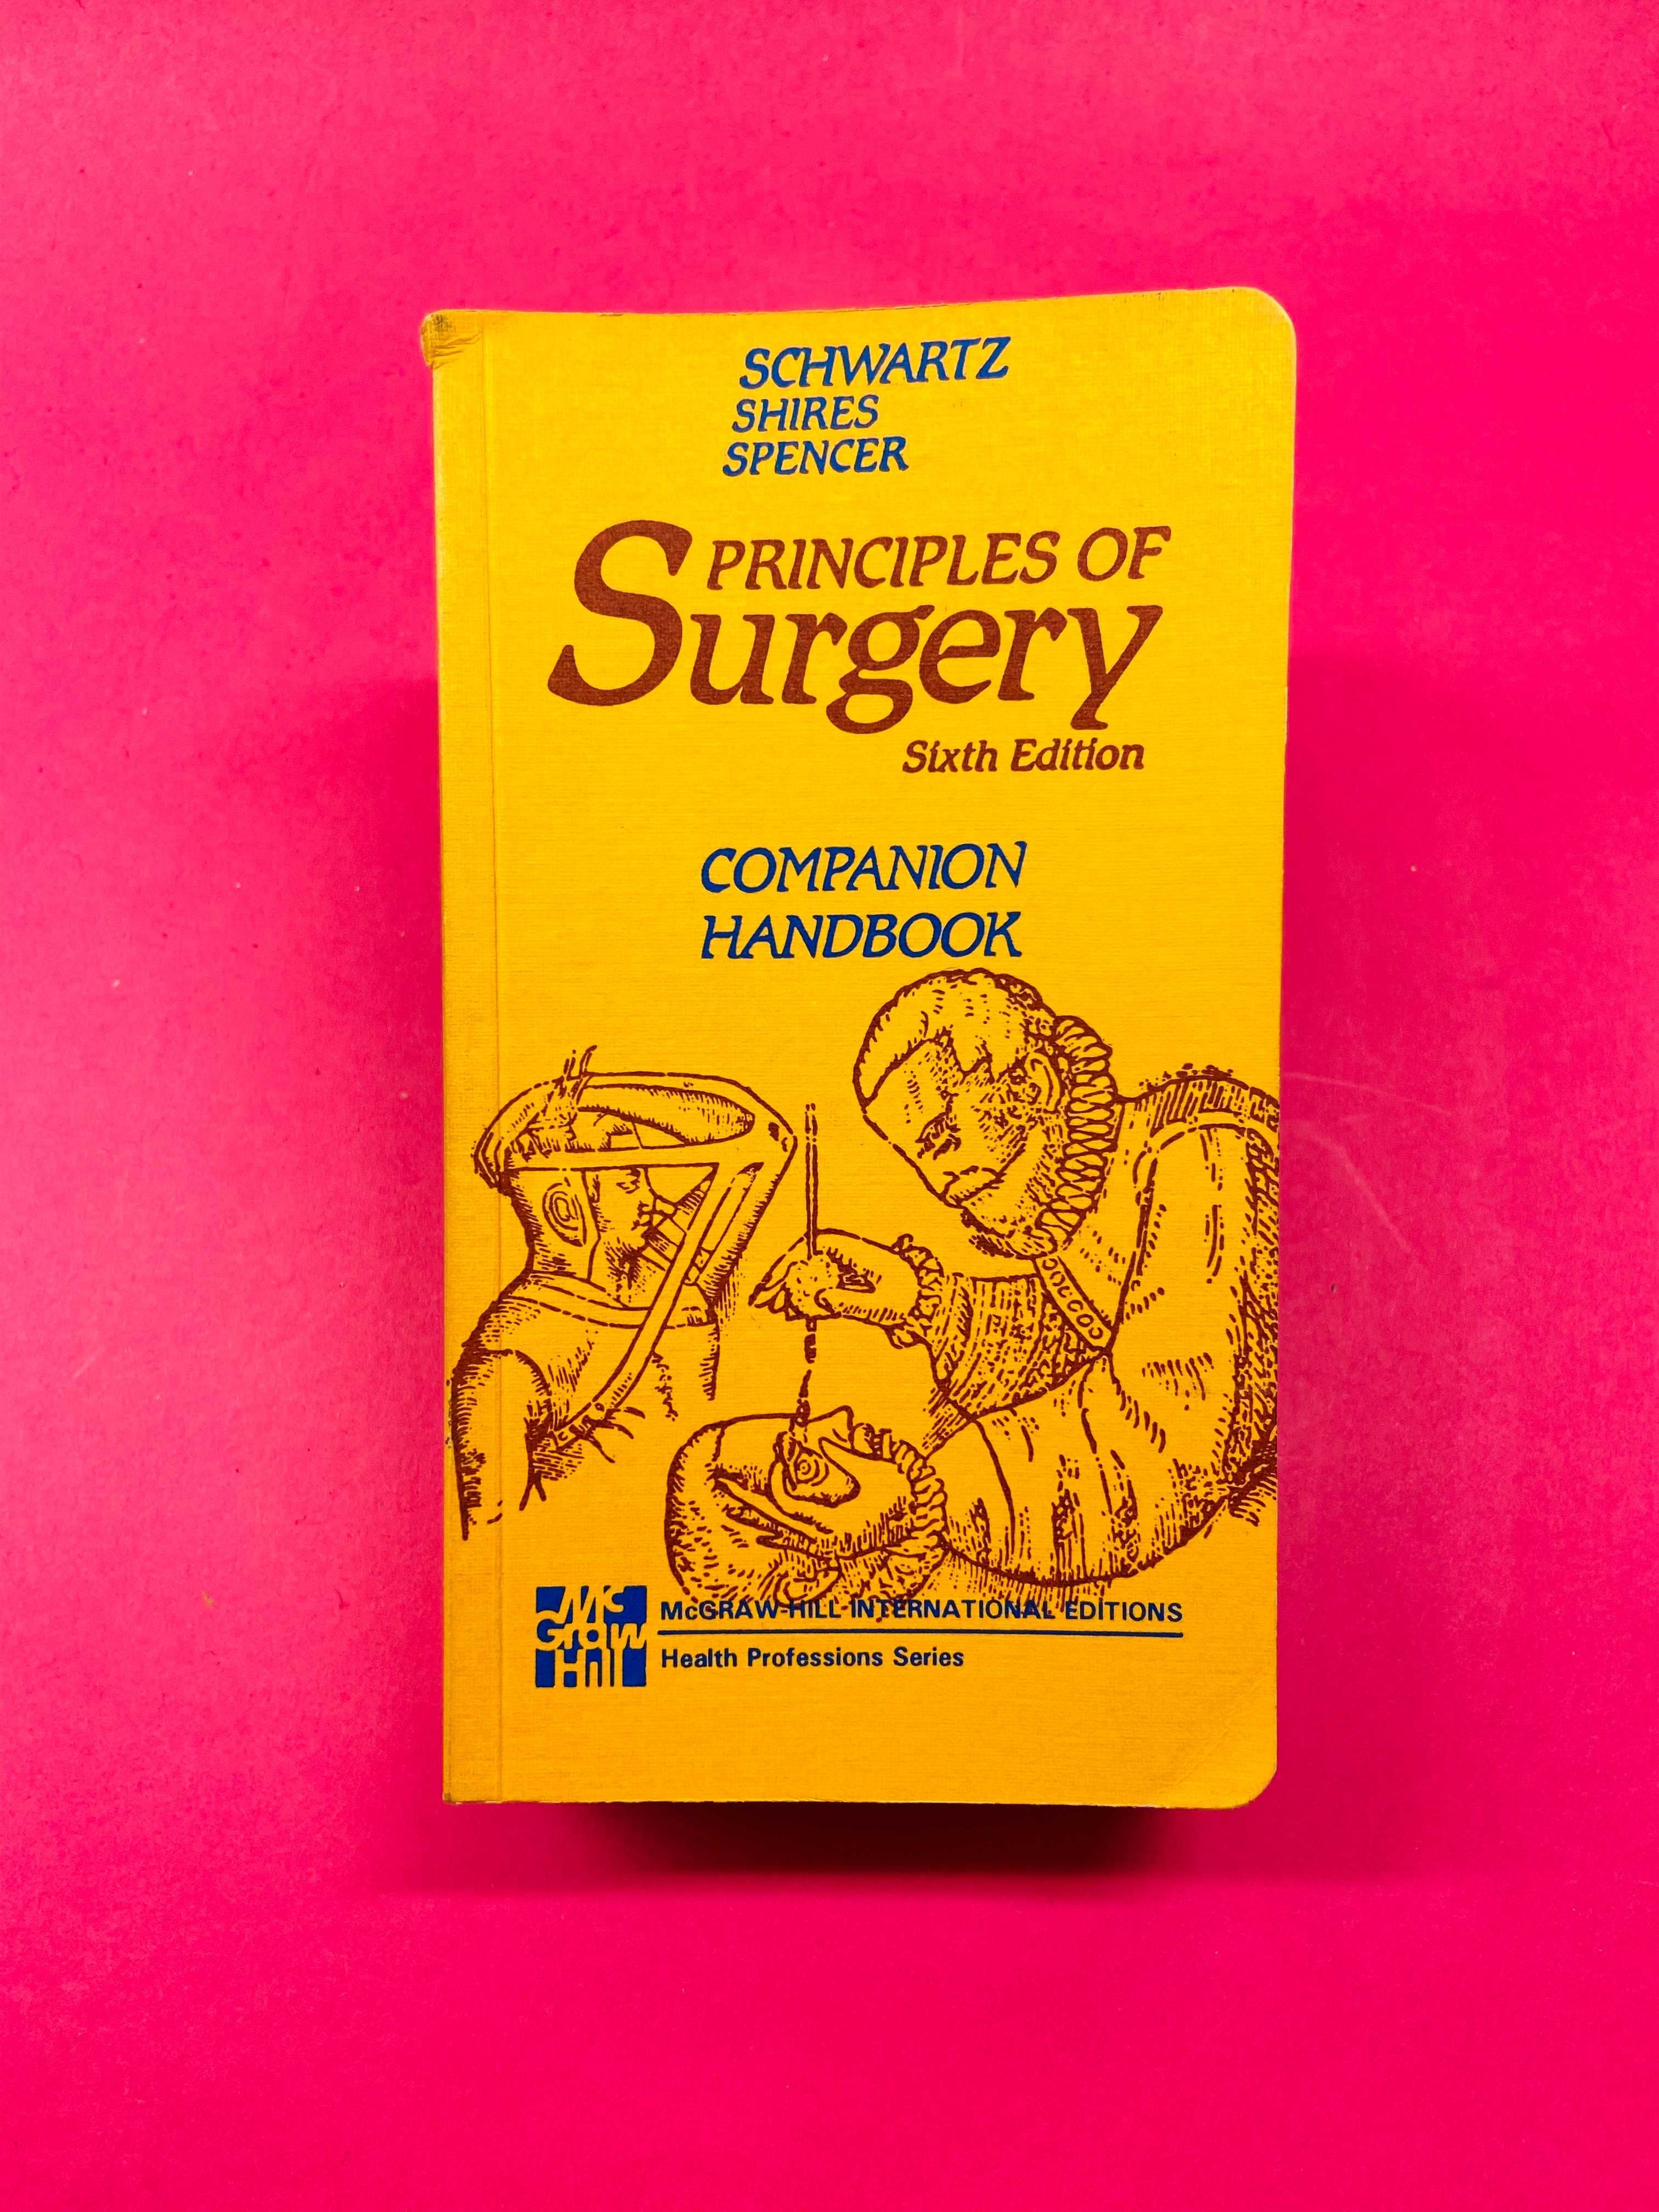 Principles of Surgery - Schwartz Shires Spencer